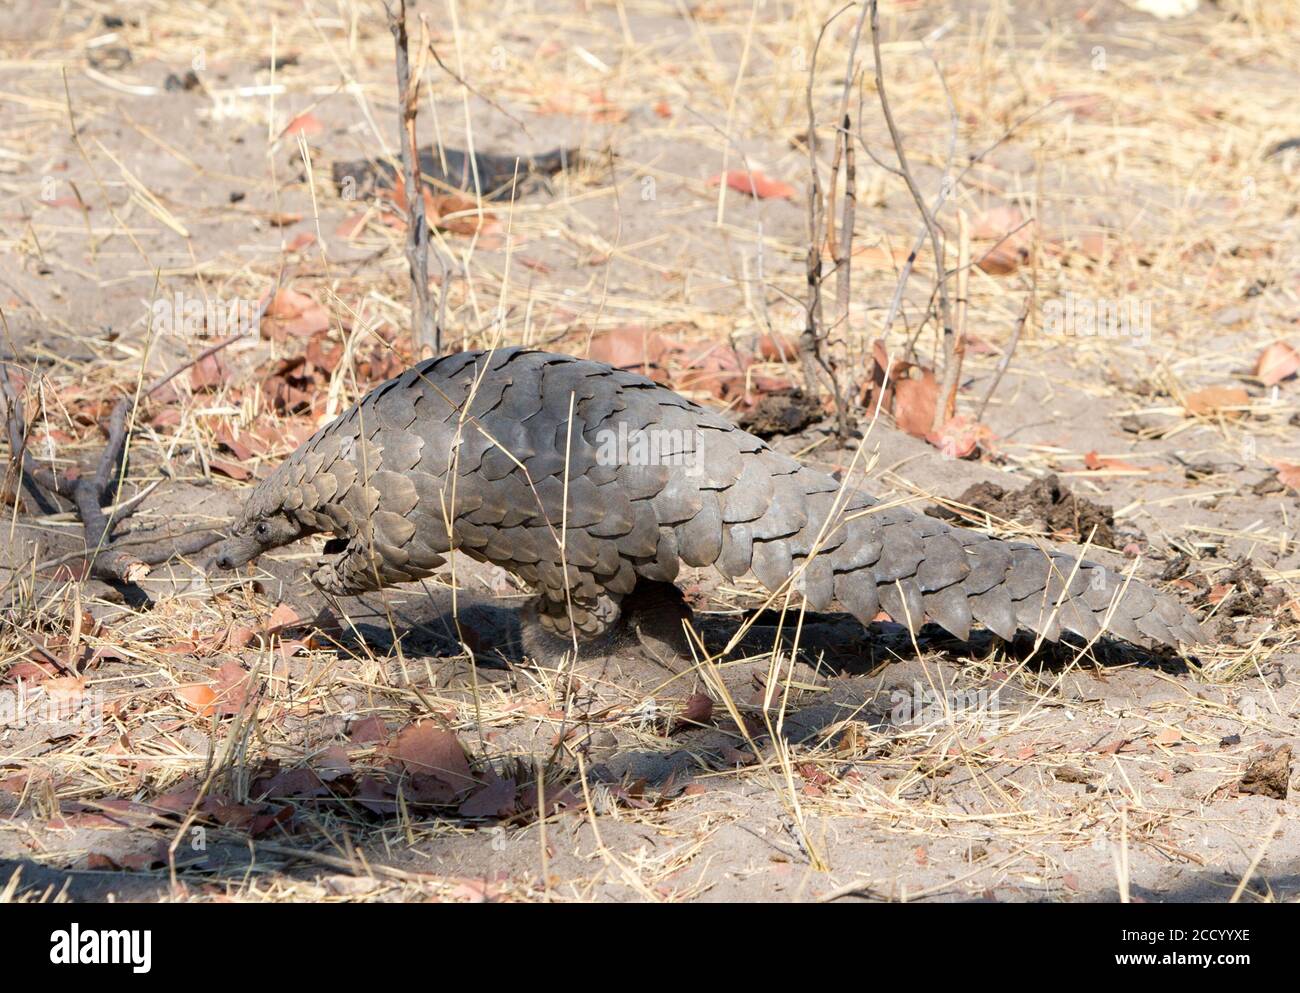 full body of a wild pangolin seen in Hwange National Park, Zimbabwe Stock Photo